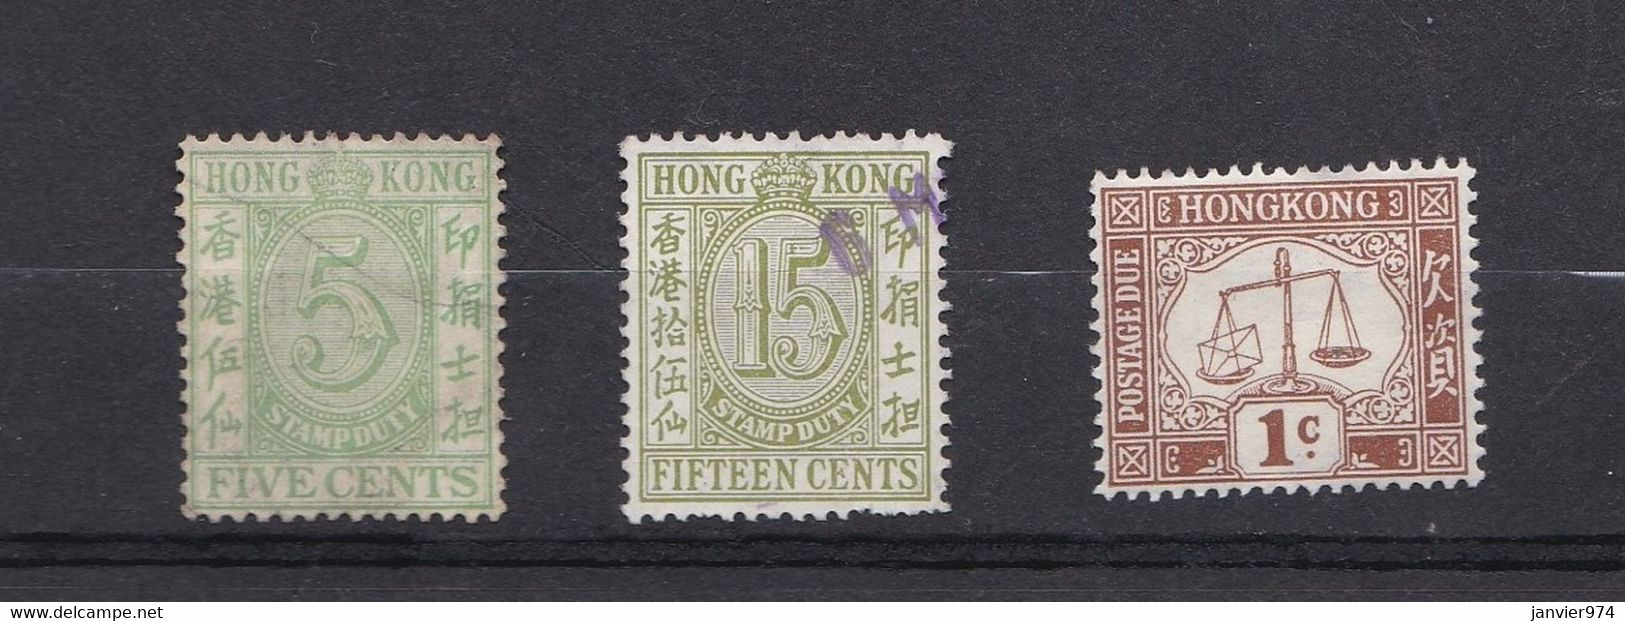 Hong Kong 2 Timbres 5 Cent Et 15 Cents 1938 + Un Timbre Taxe 1924, Voir Scan - Postal Fiscal Stamps